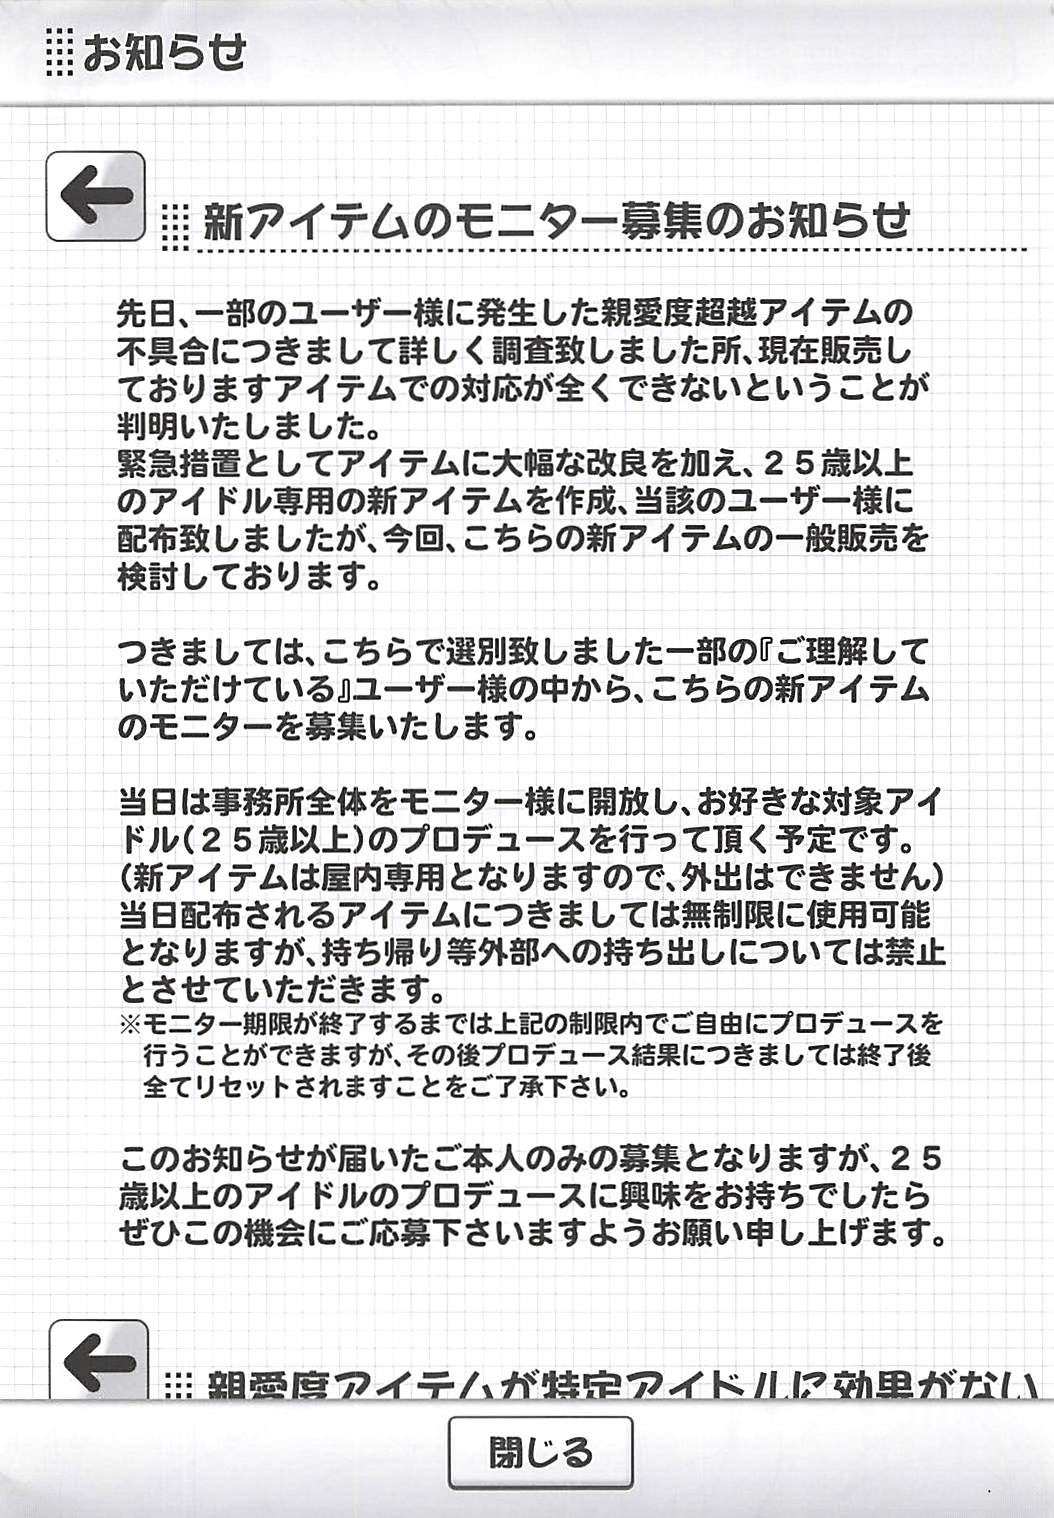 (COMIC1☆13) [ふらいぱん大魔王 (提灯暗光)] Otona no Okusuri Produce!!! (アイドルマスター シンデレラガールズ)